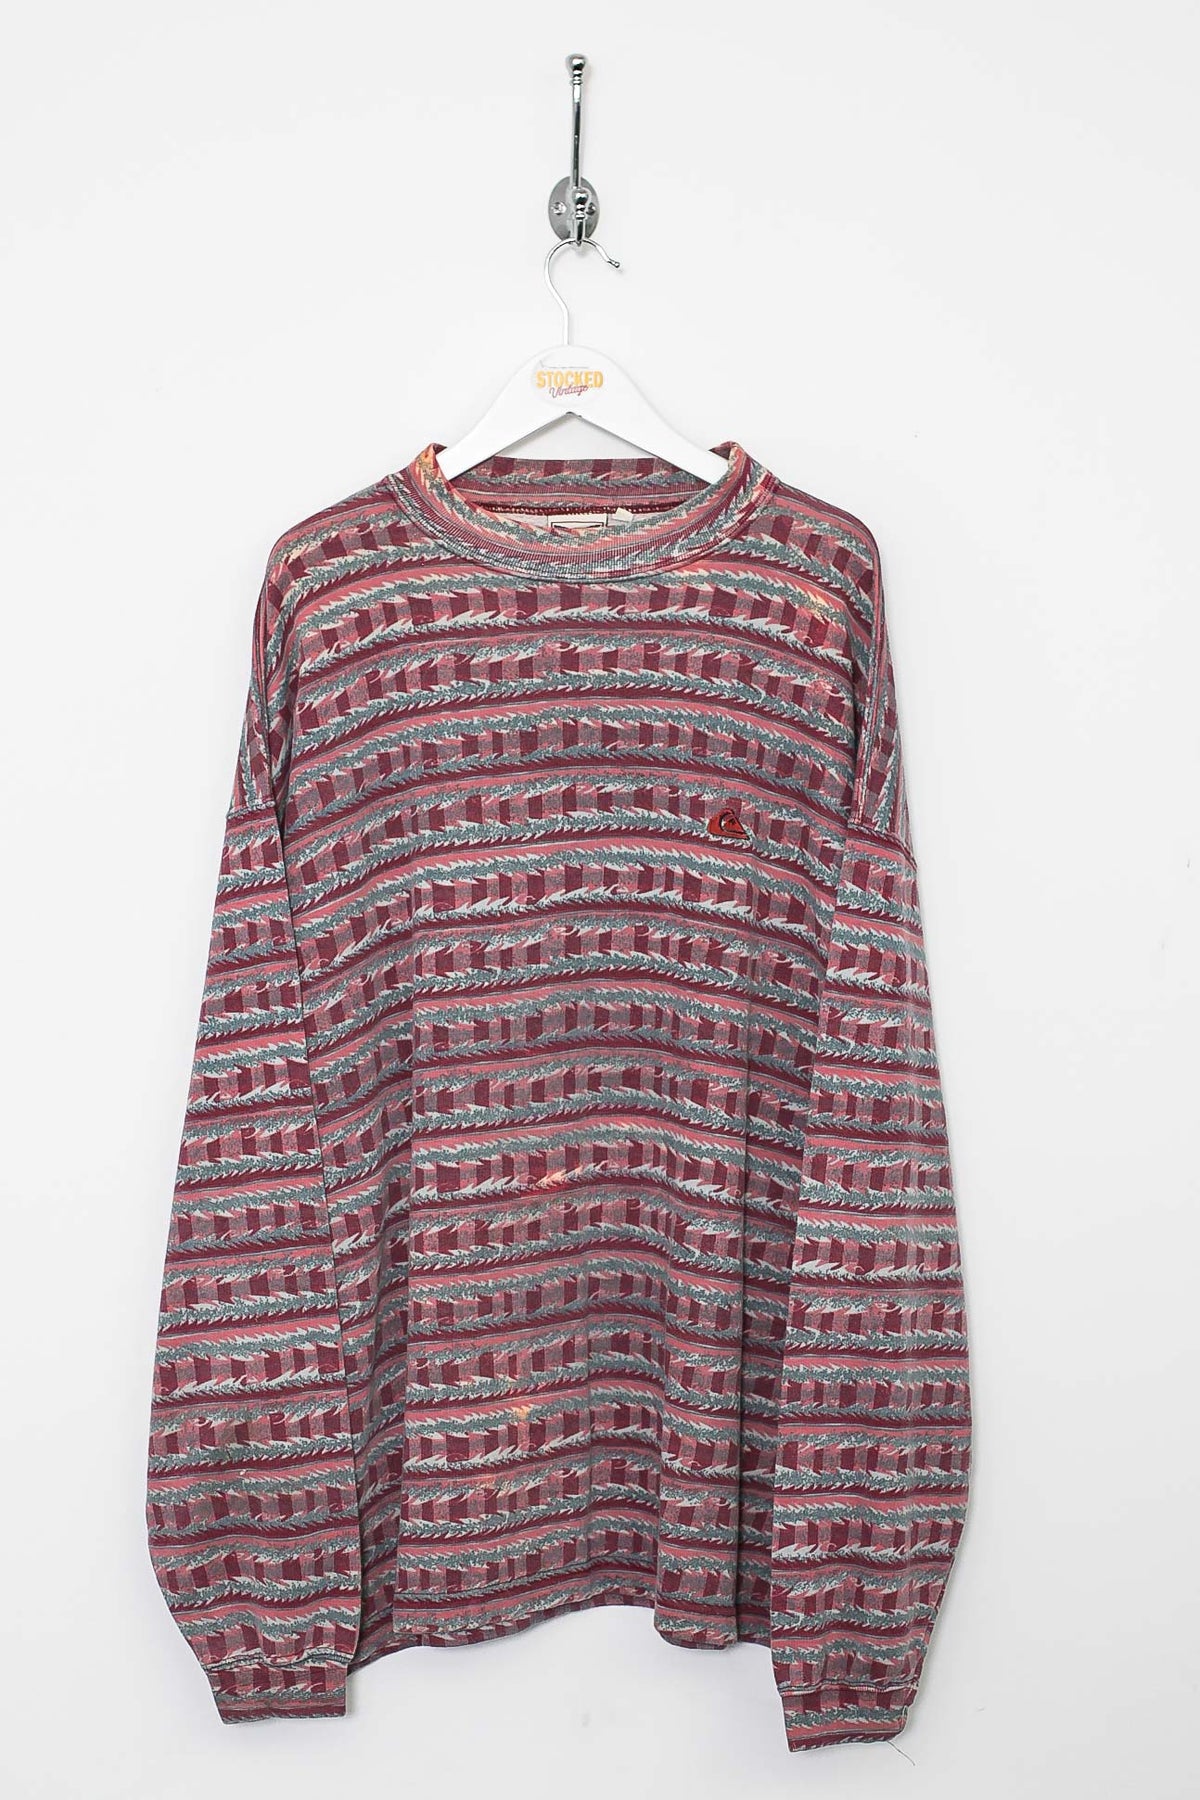 90s Quicksilver Abstract Sweatshirt (L)